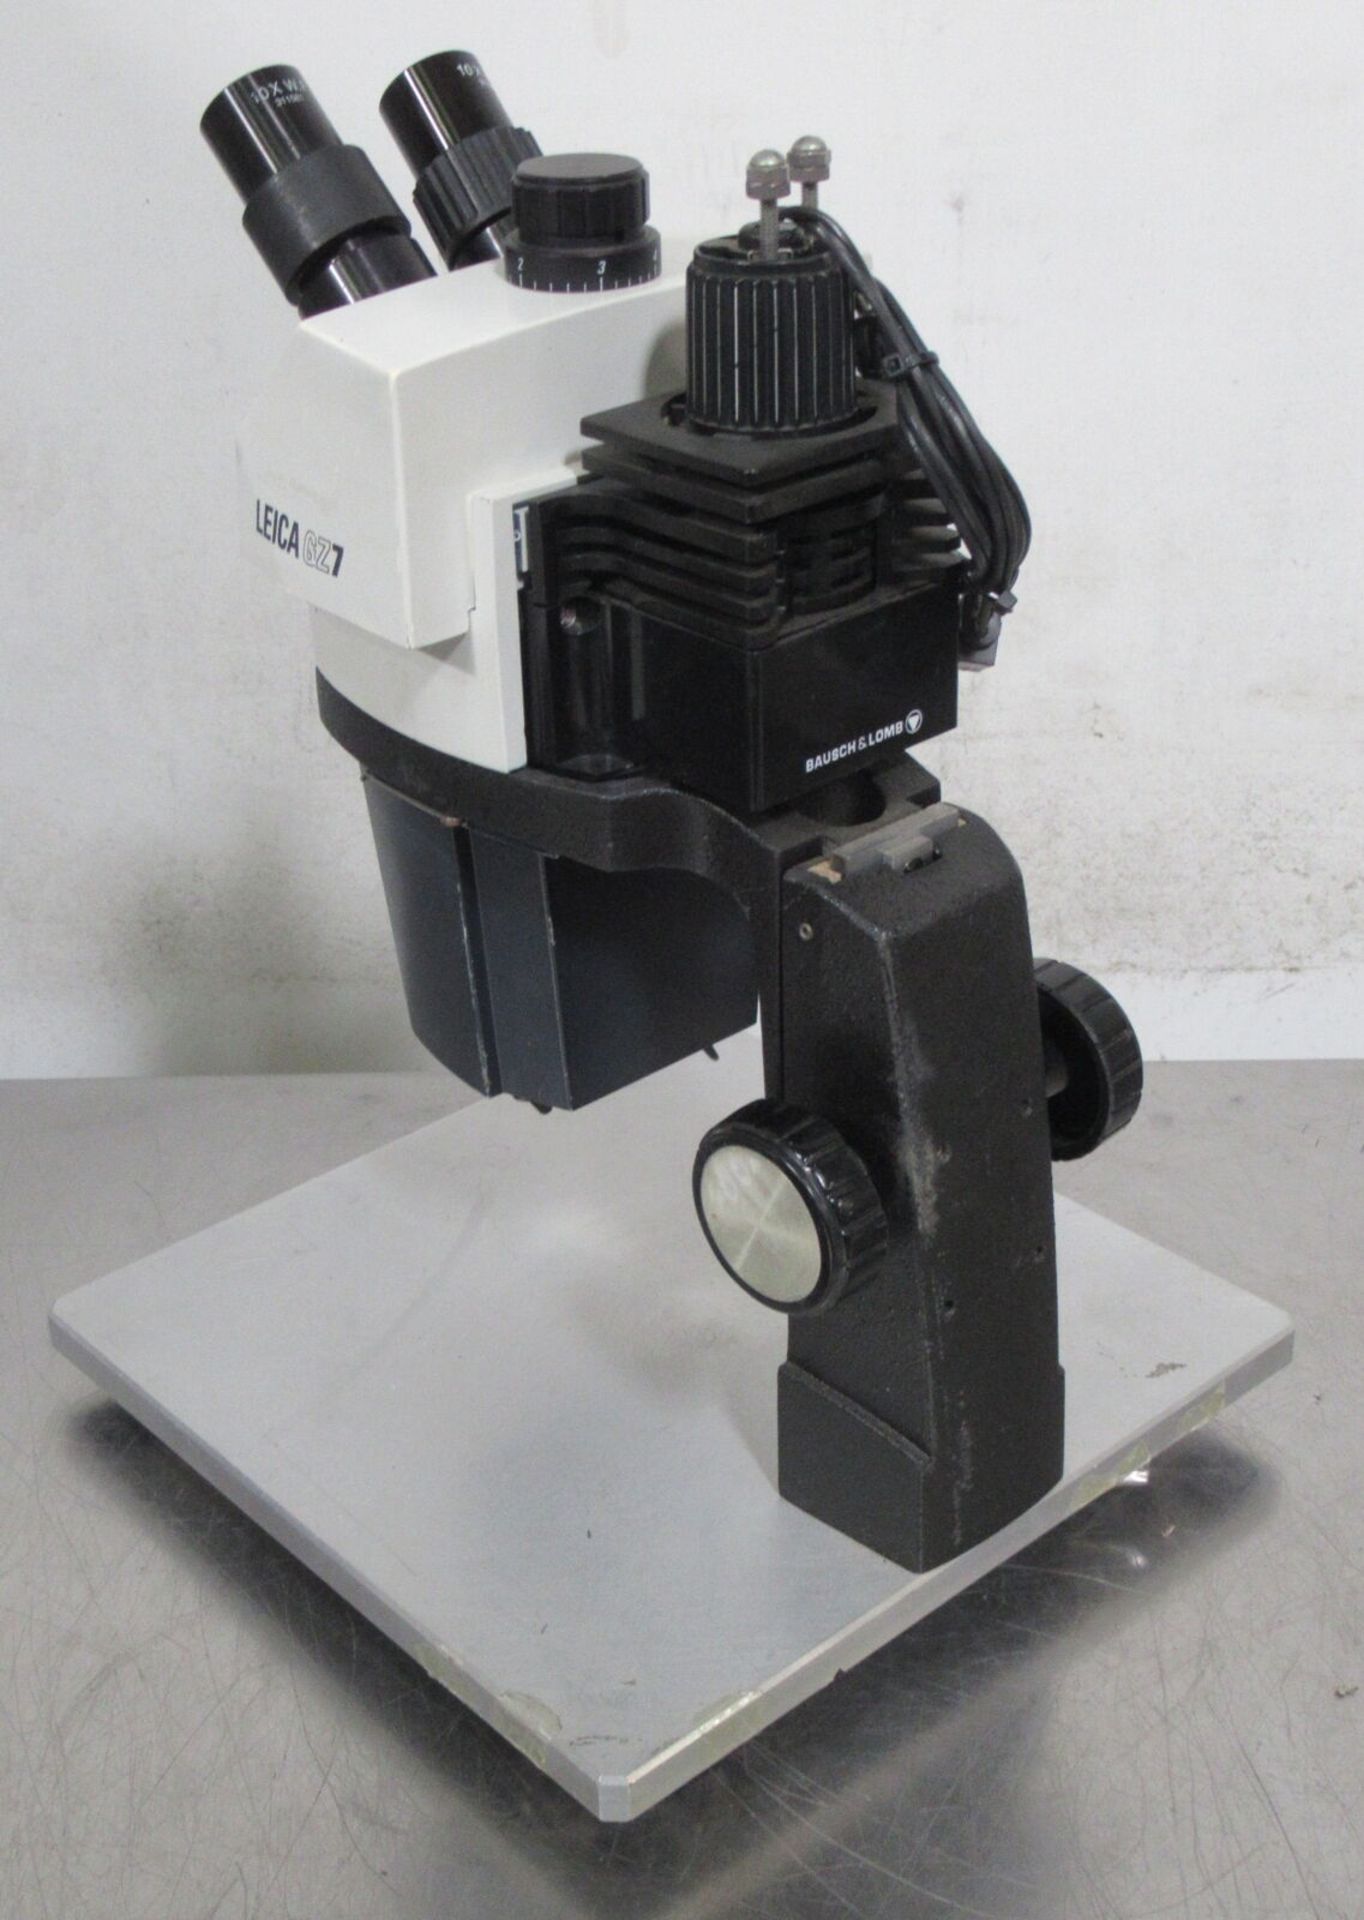 Leica GZ7 Stereo Zoom Microscope w/ Stand, 10X WF Eyepieces, Illuminator - Gilroy - Image 4 of 6